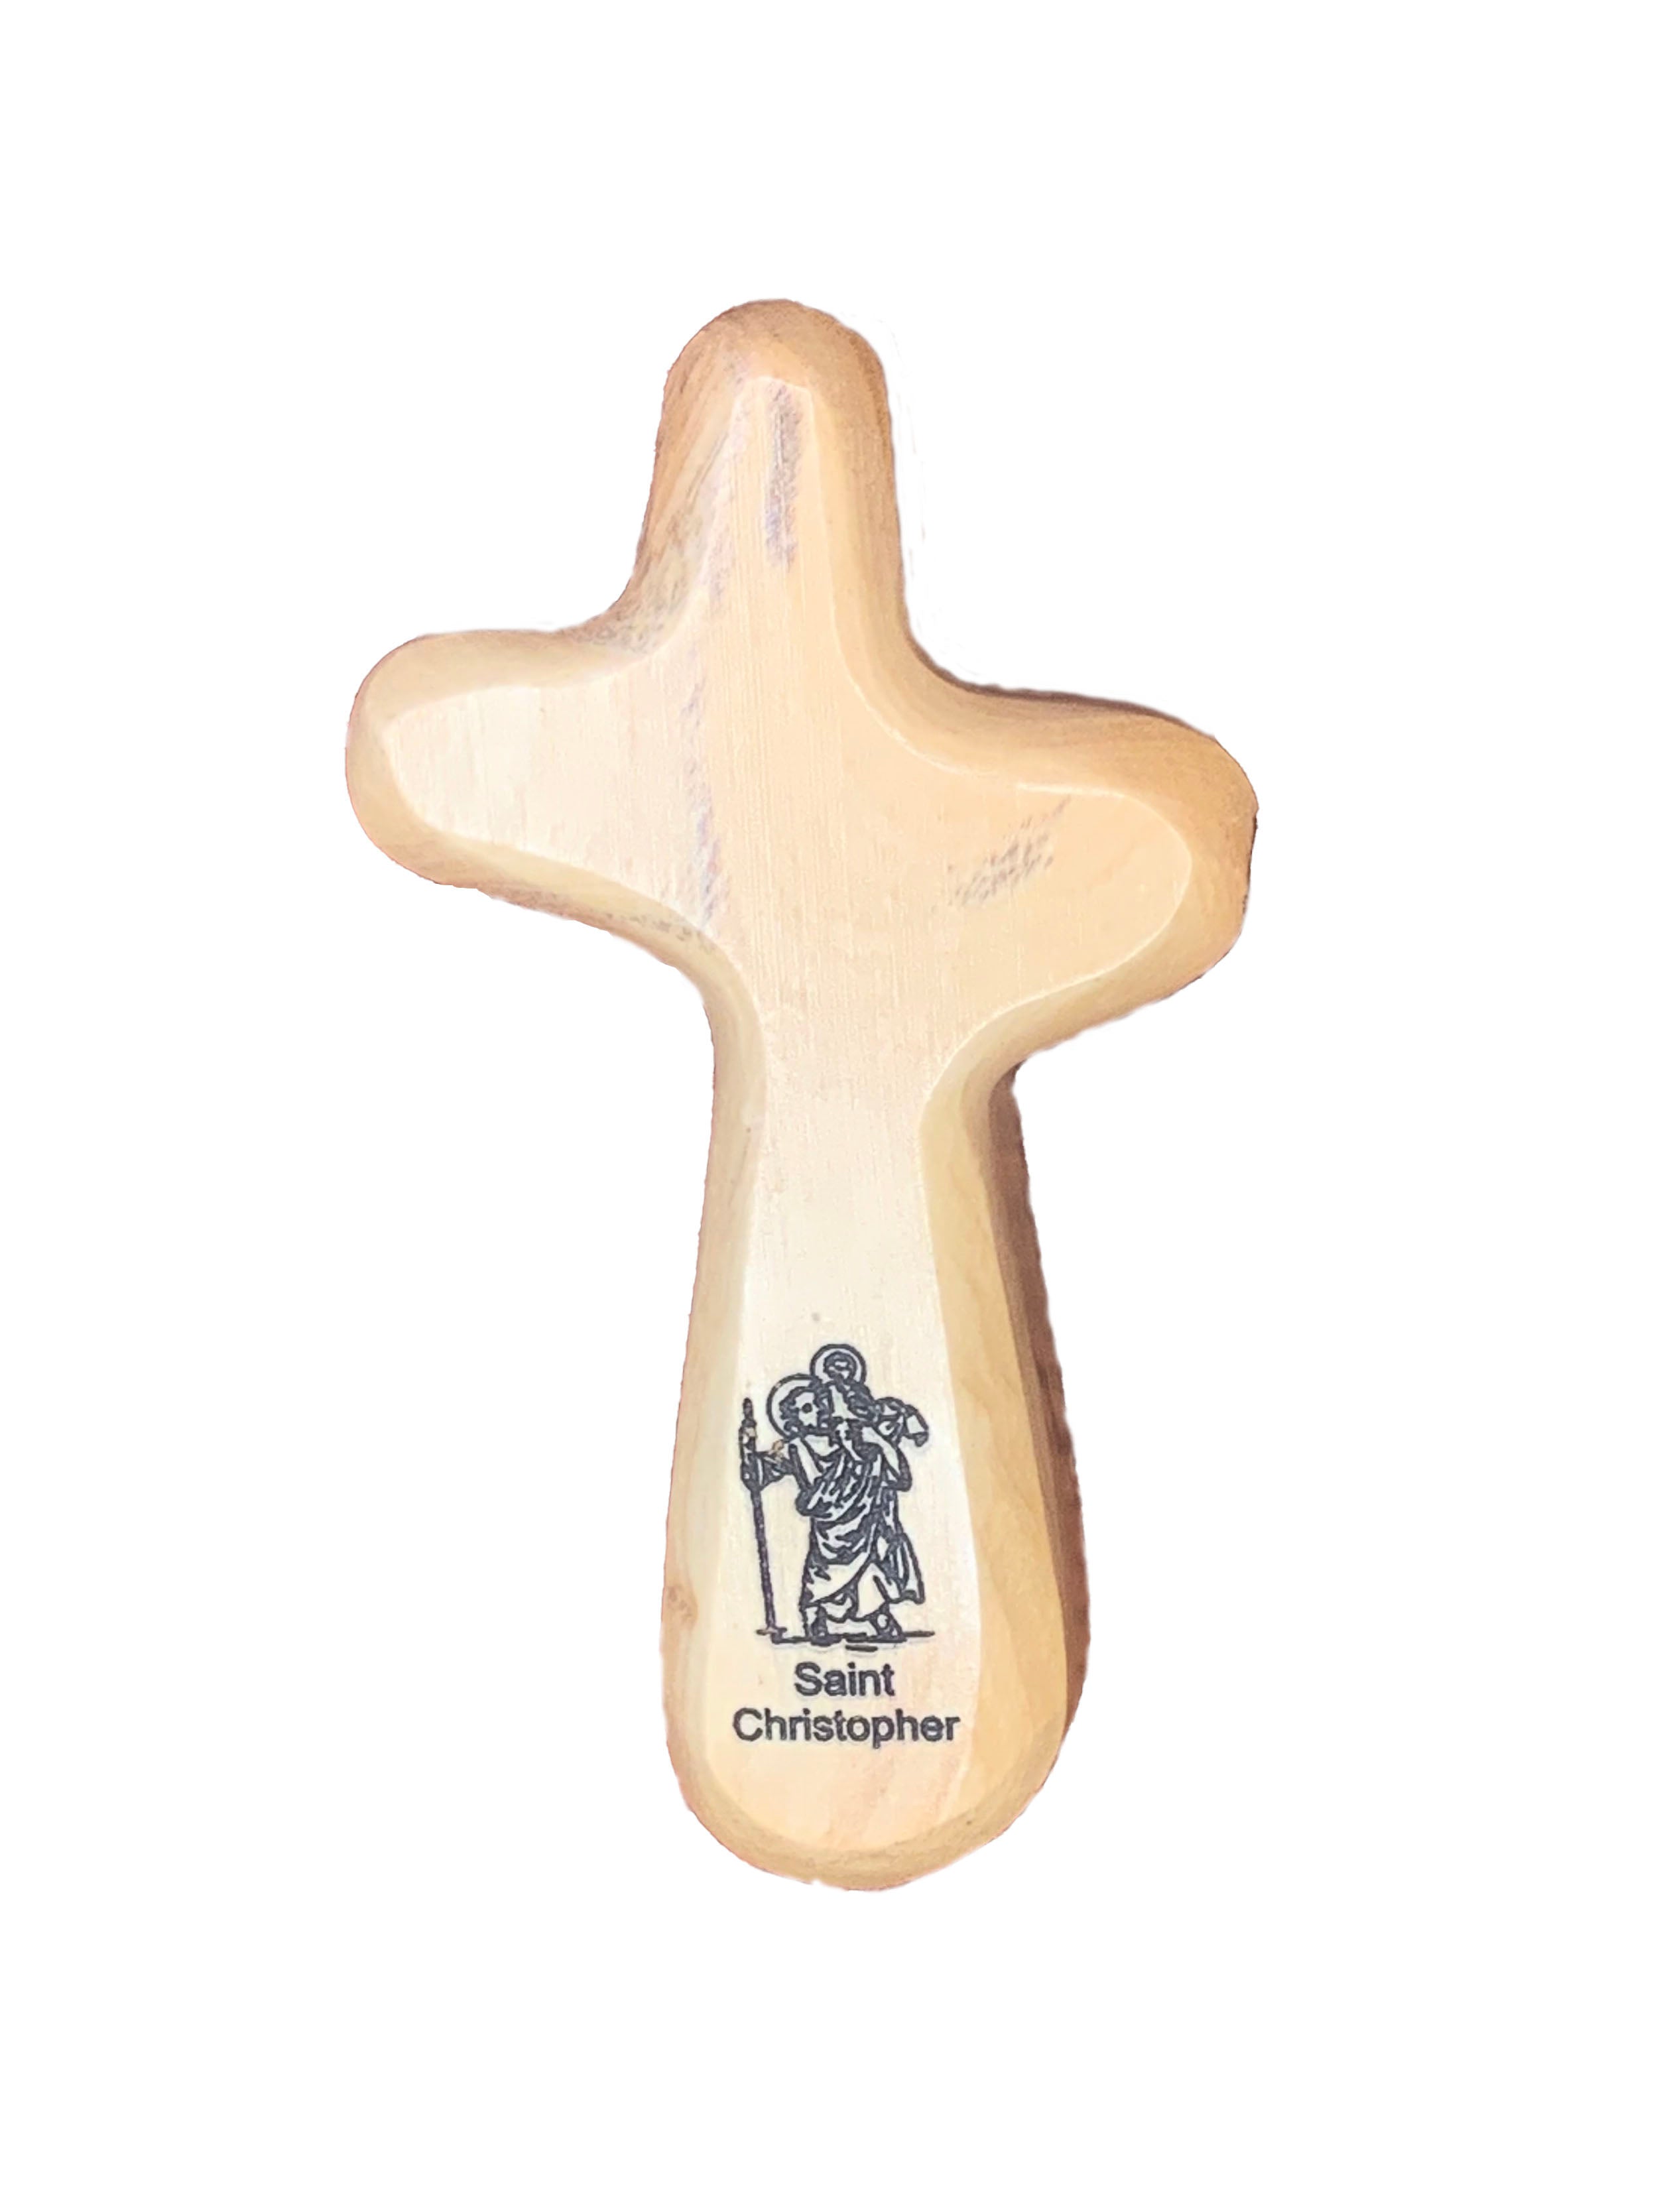 Olive Wood holding crosses, Comfort crosses made in Bethlehem